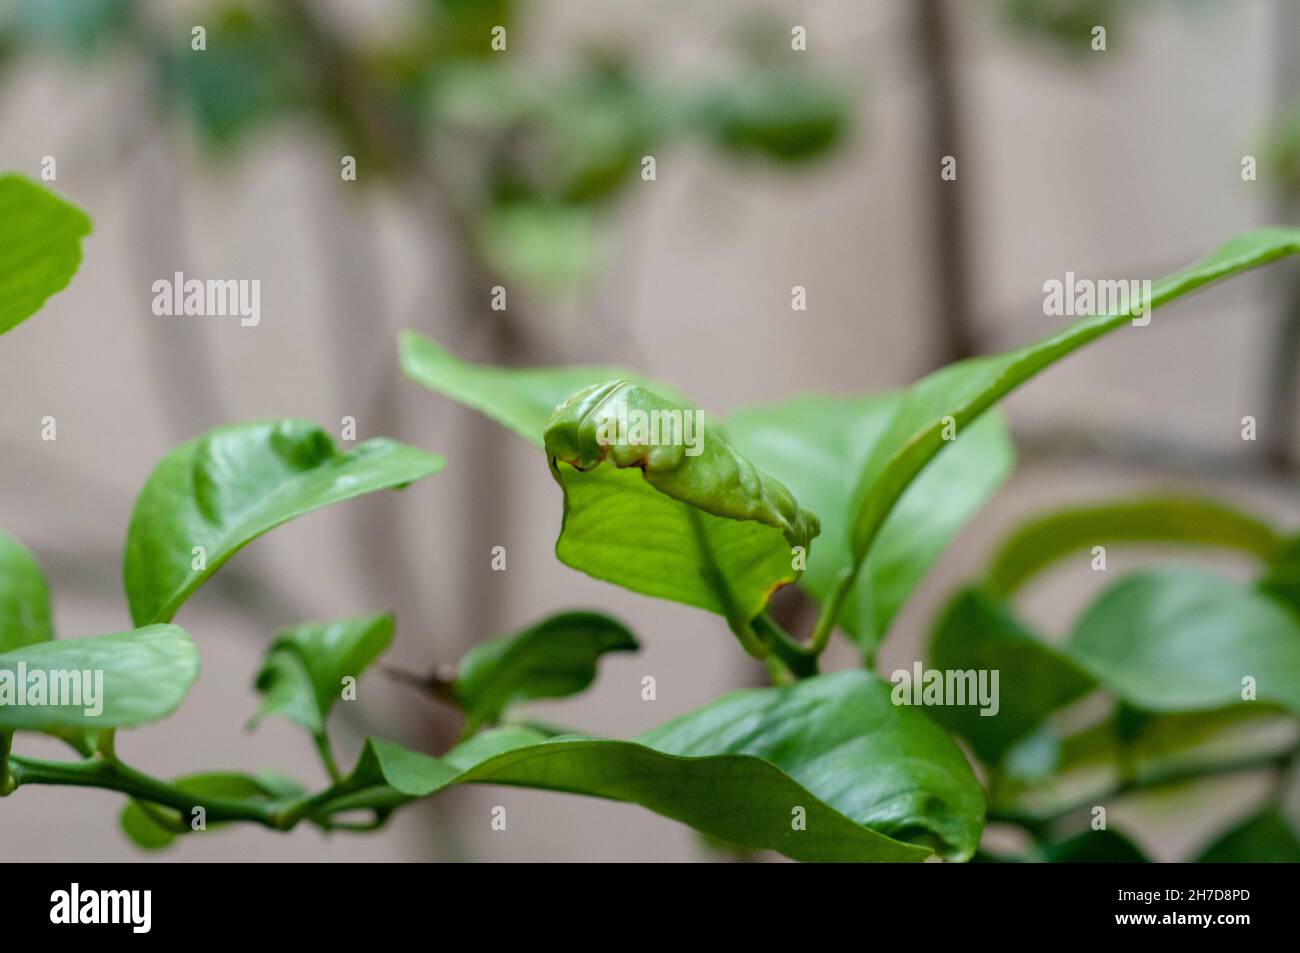 Lemon tree leaves distorted by calcium deficiency Stock Photo